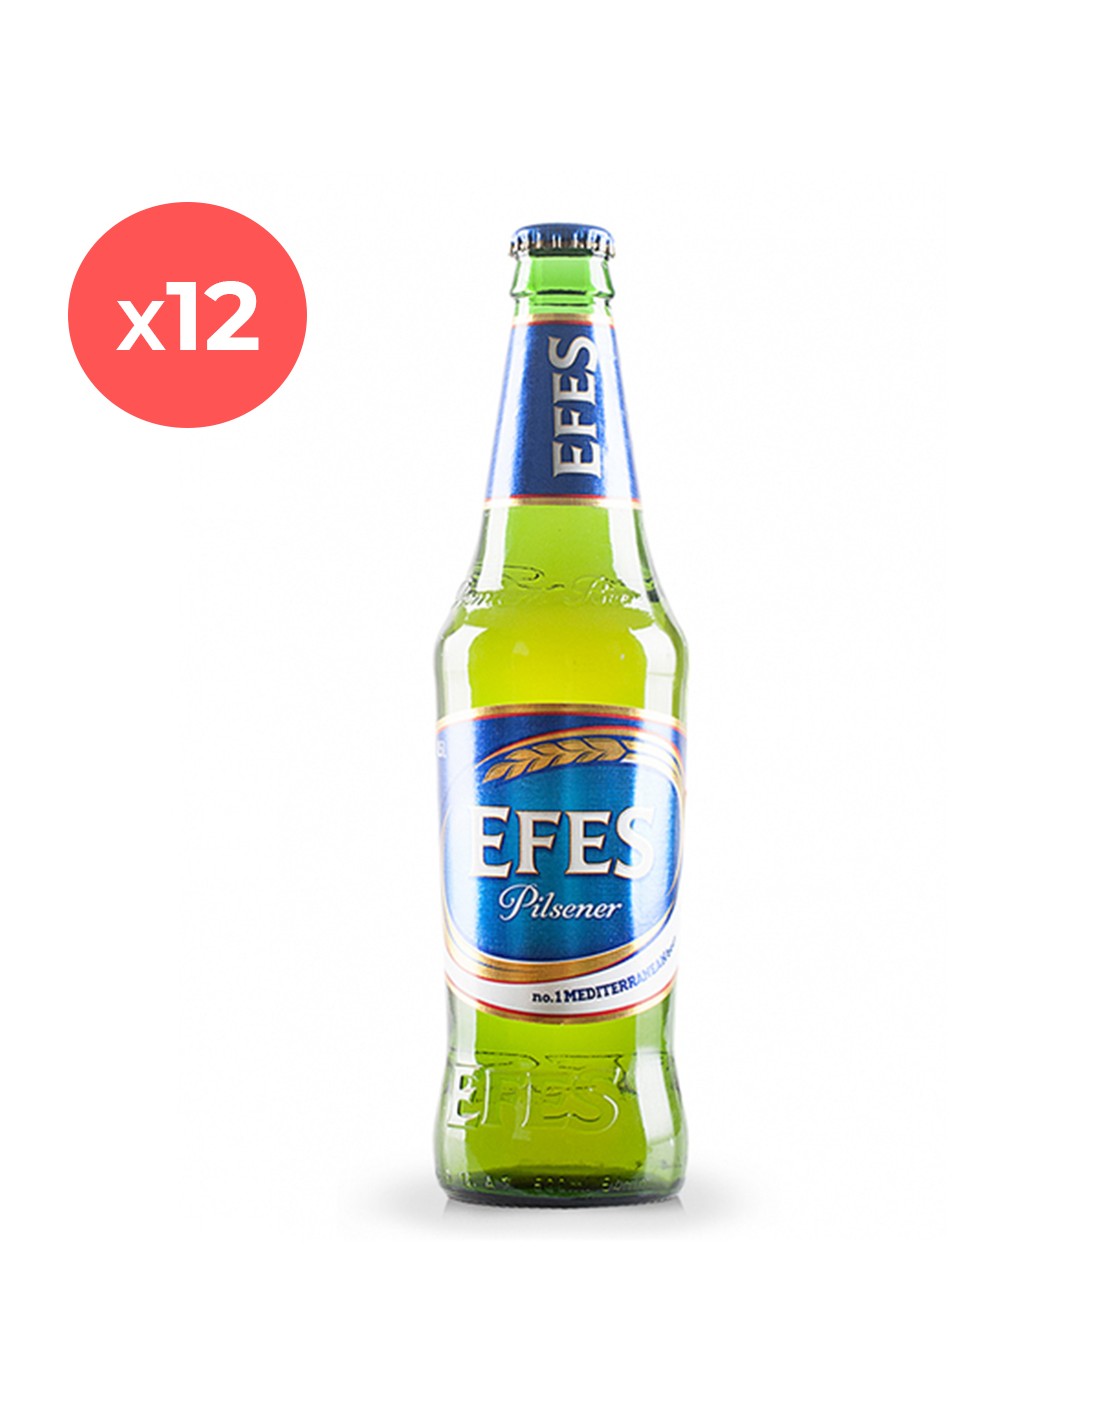 Bax 12 bucati bere blonda, filtrata, Efes Pilsener, 5% alc., 0.5L, sticla, Turcia alcooldiscount.ro